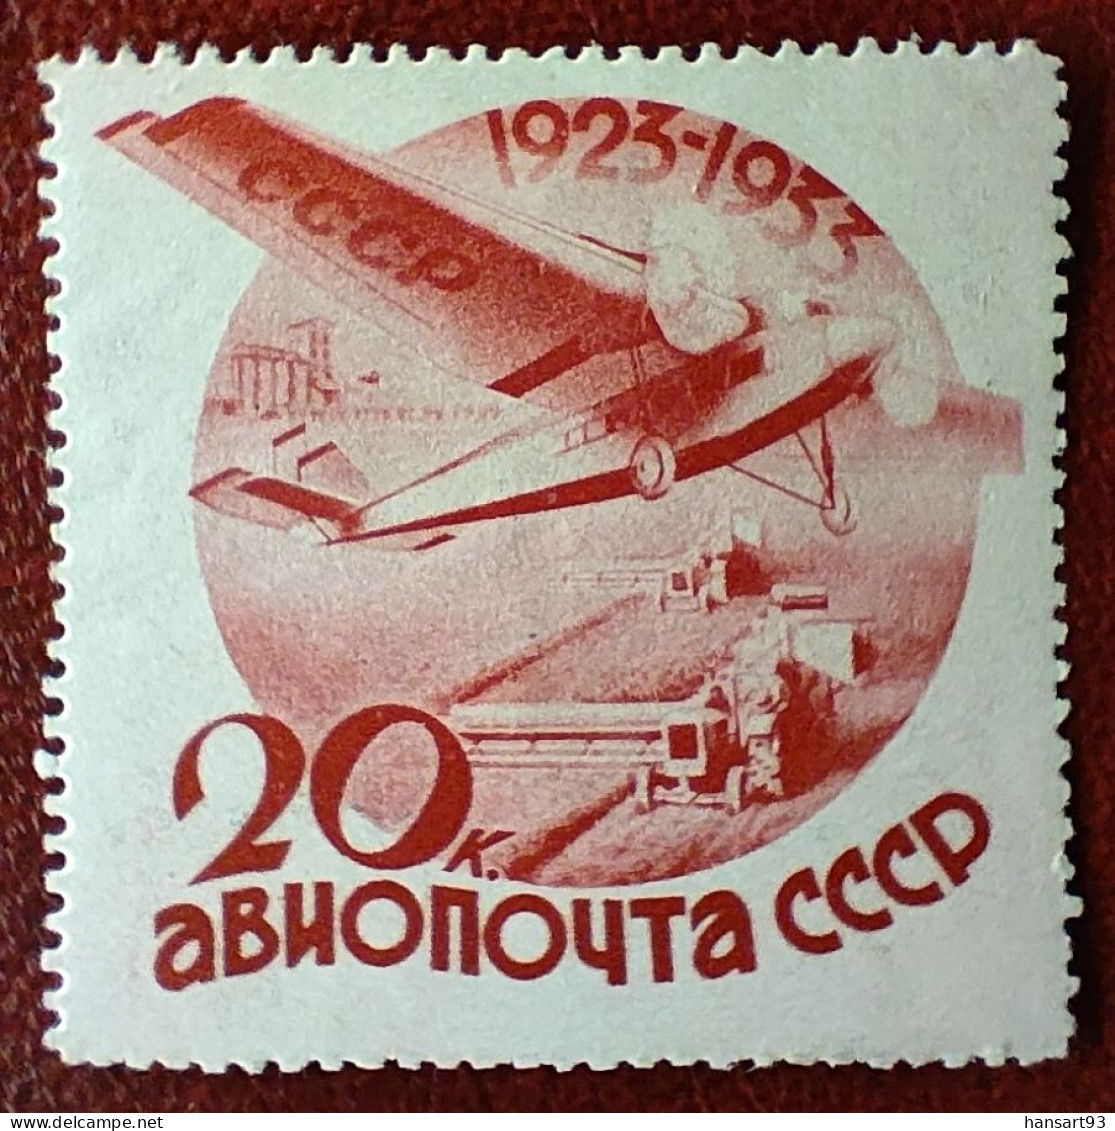 URSS Rare Poste Aérienne N° 43 N* TTB Avec Un Petit Pli Horizontal ! Cote 2020 : 50,00 Euros ! A Voir Absolument !! - Ongebruikt